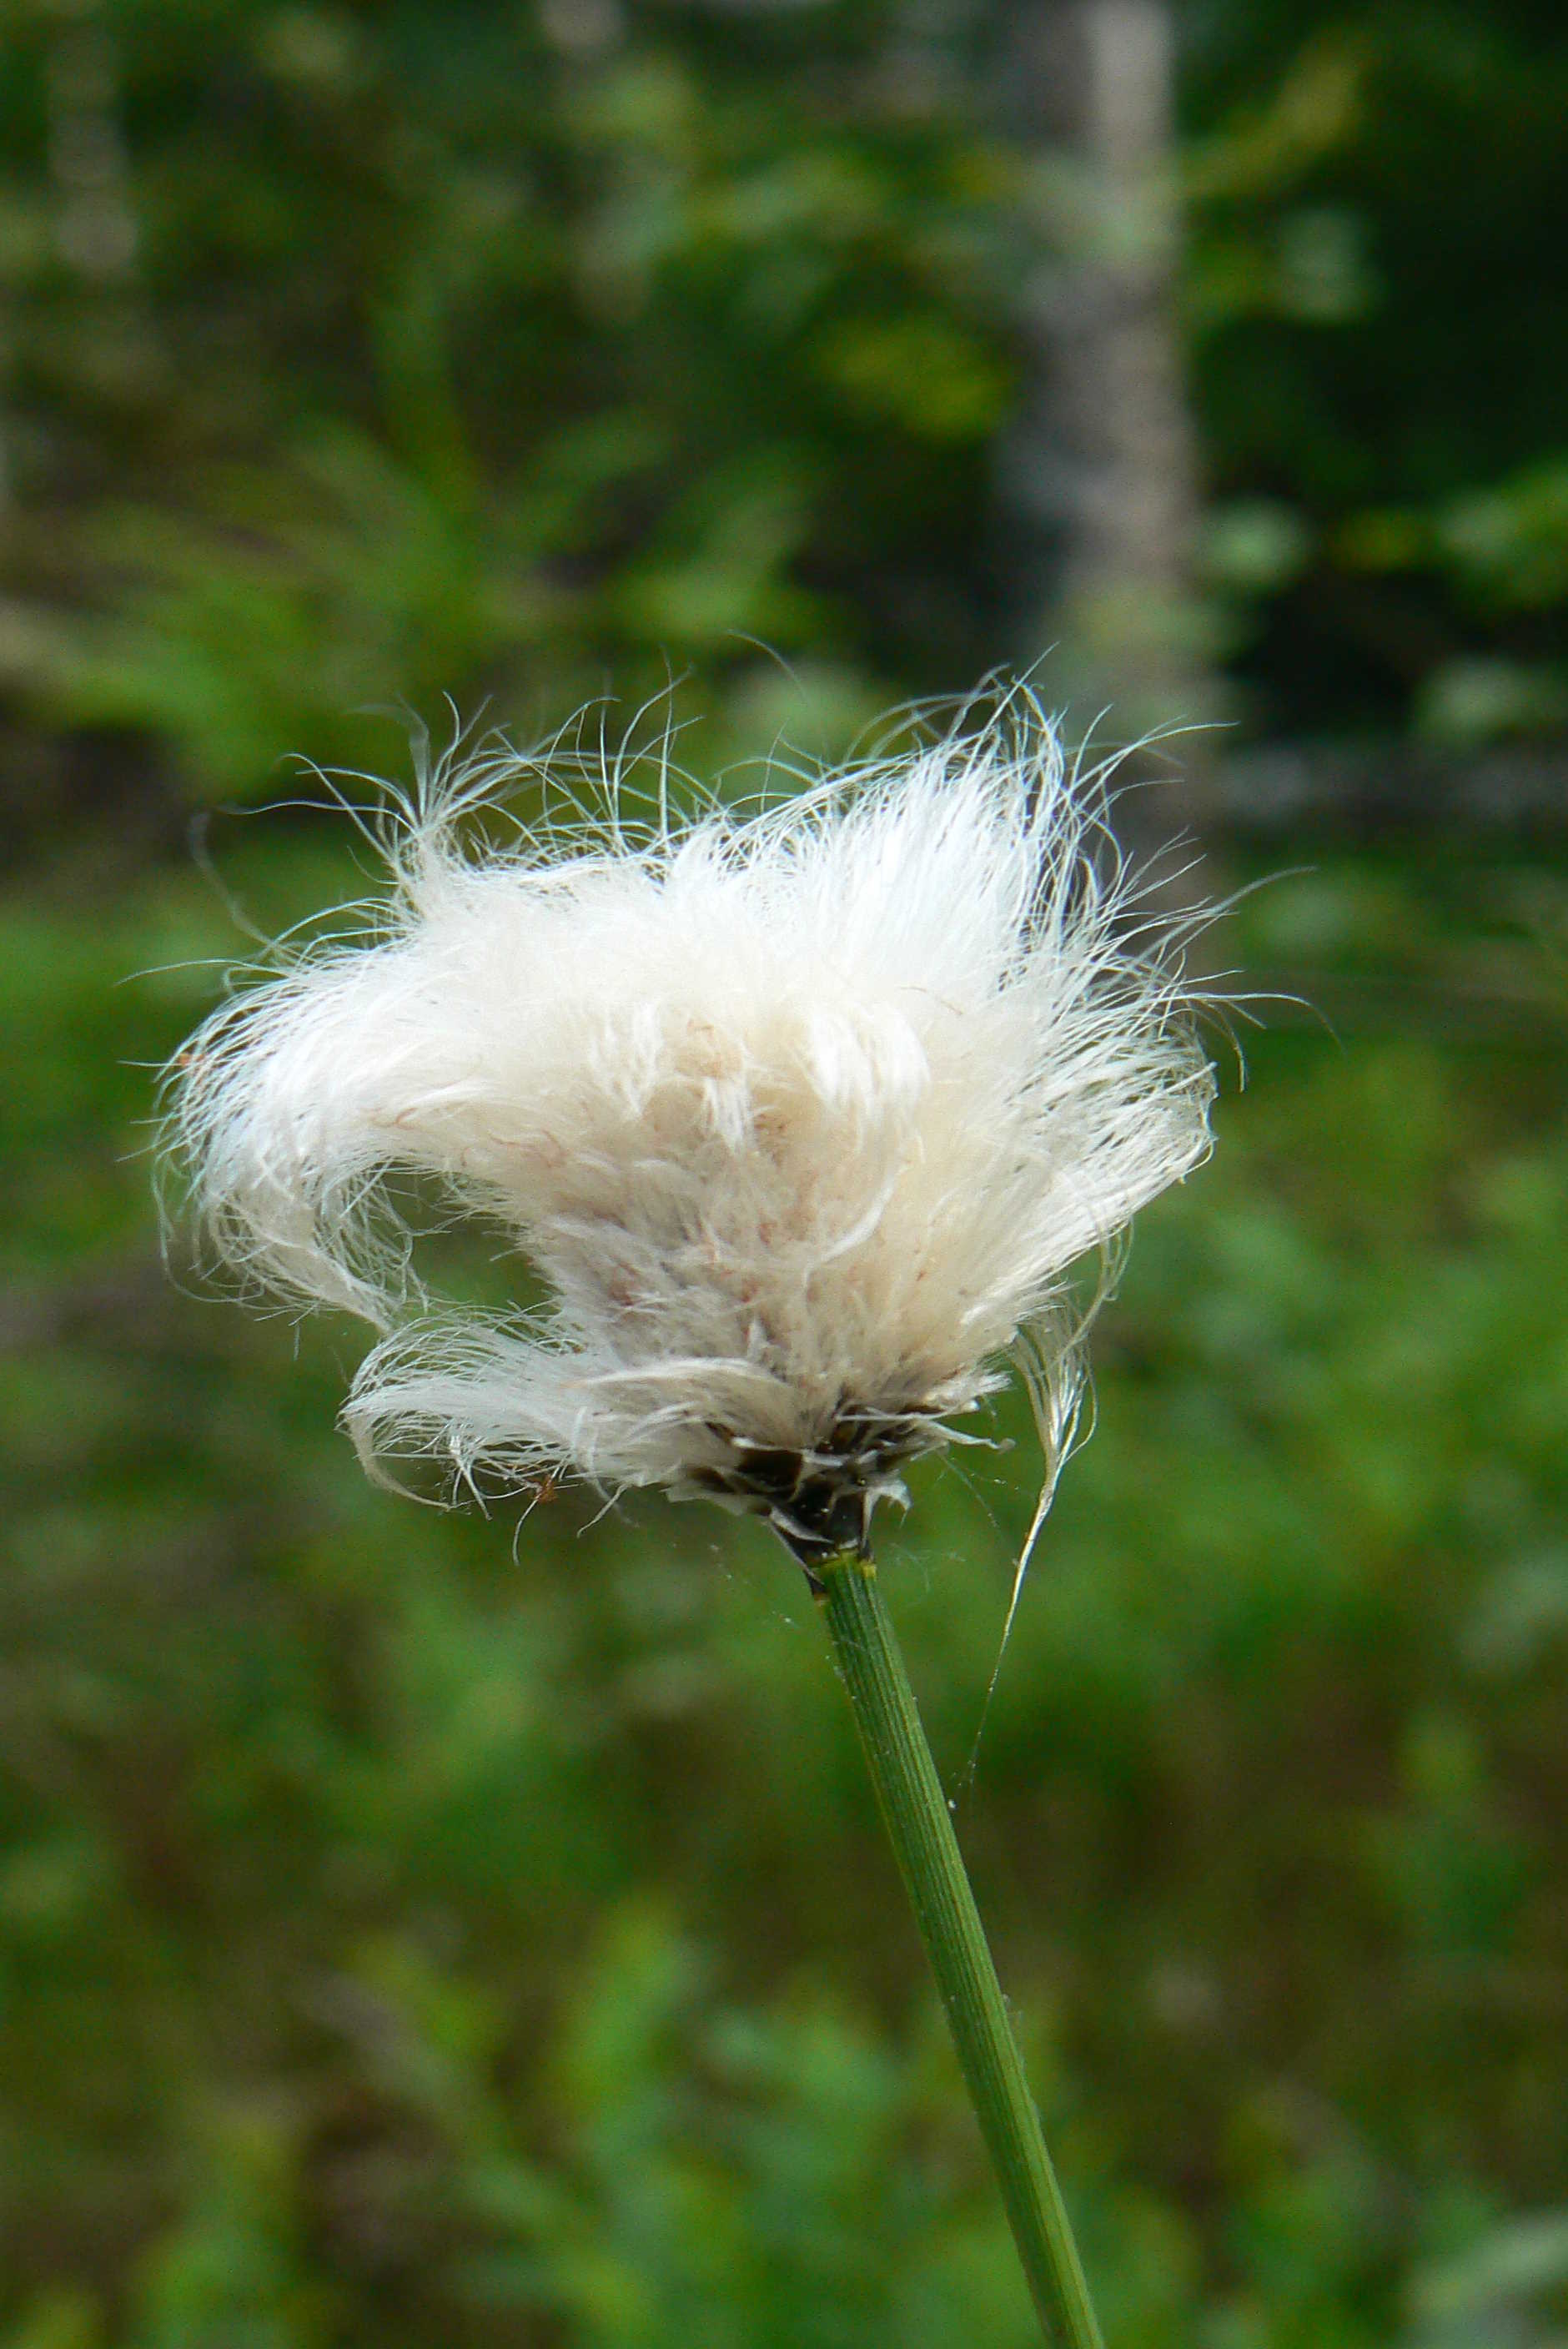 Hair’s-tail cottongrass